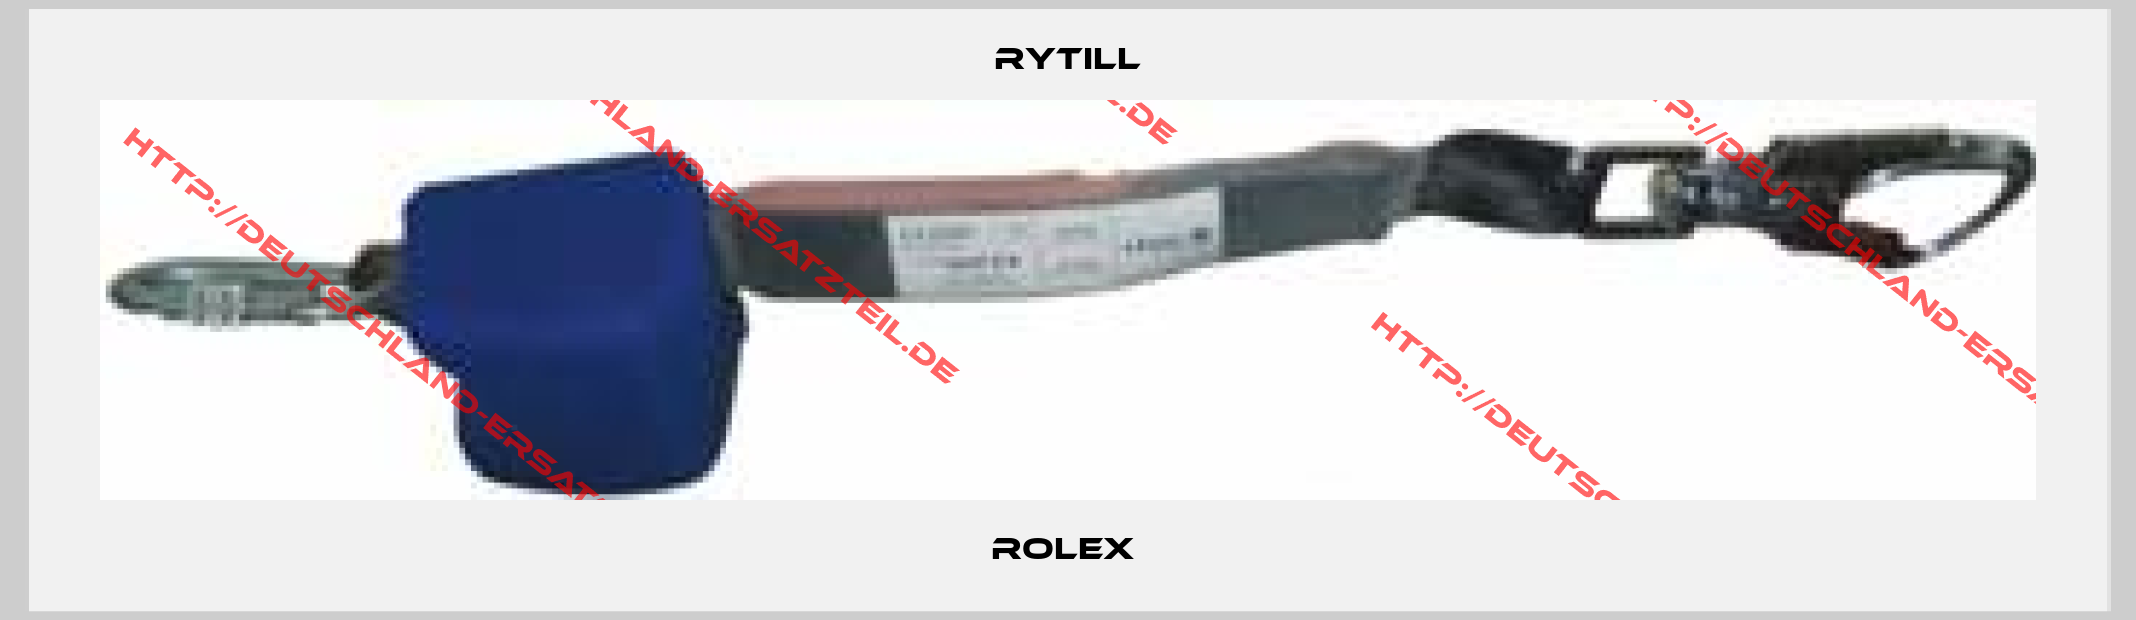 Rytill-ROLEX 